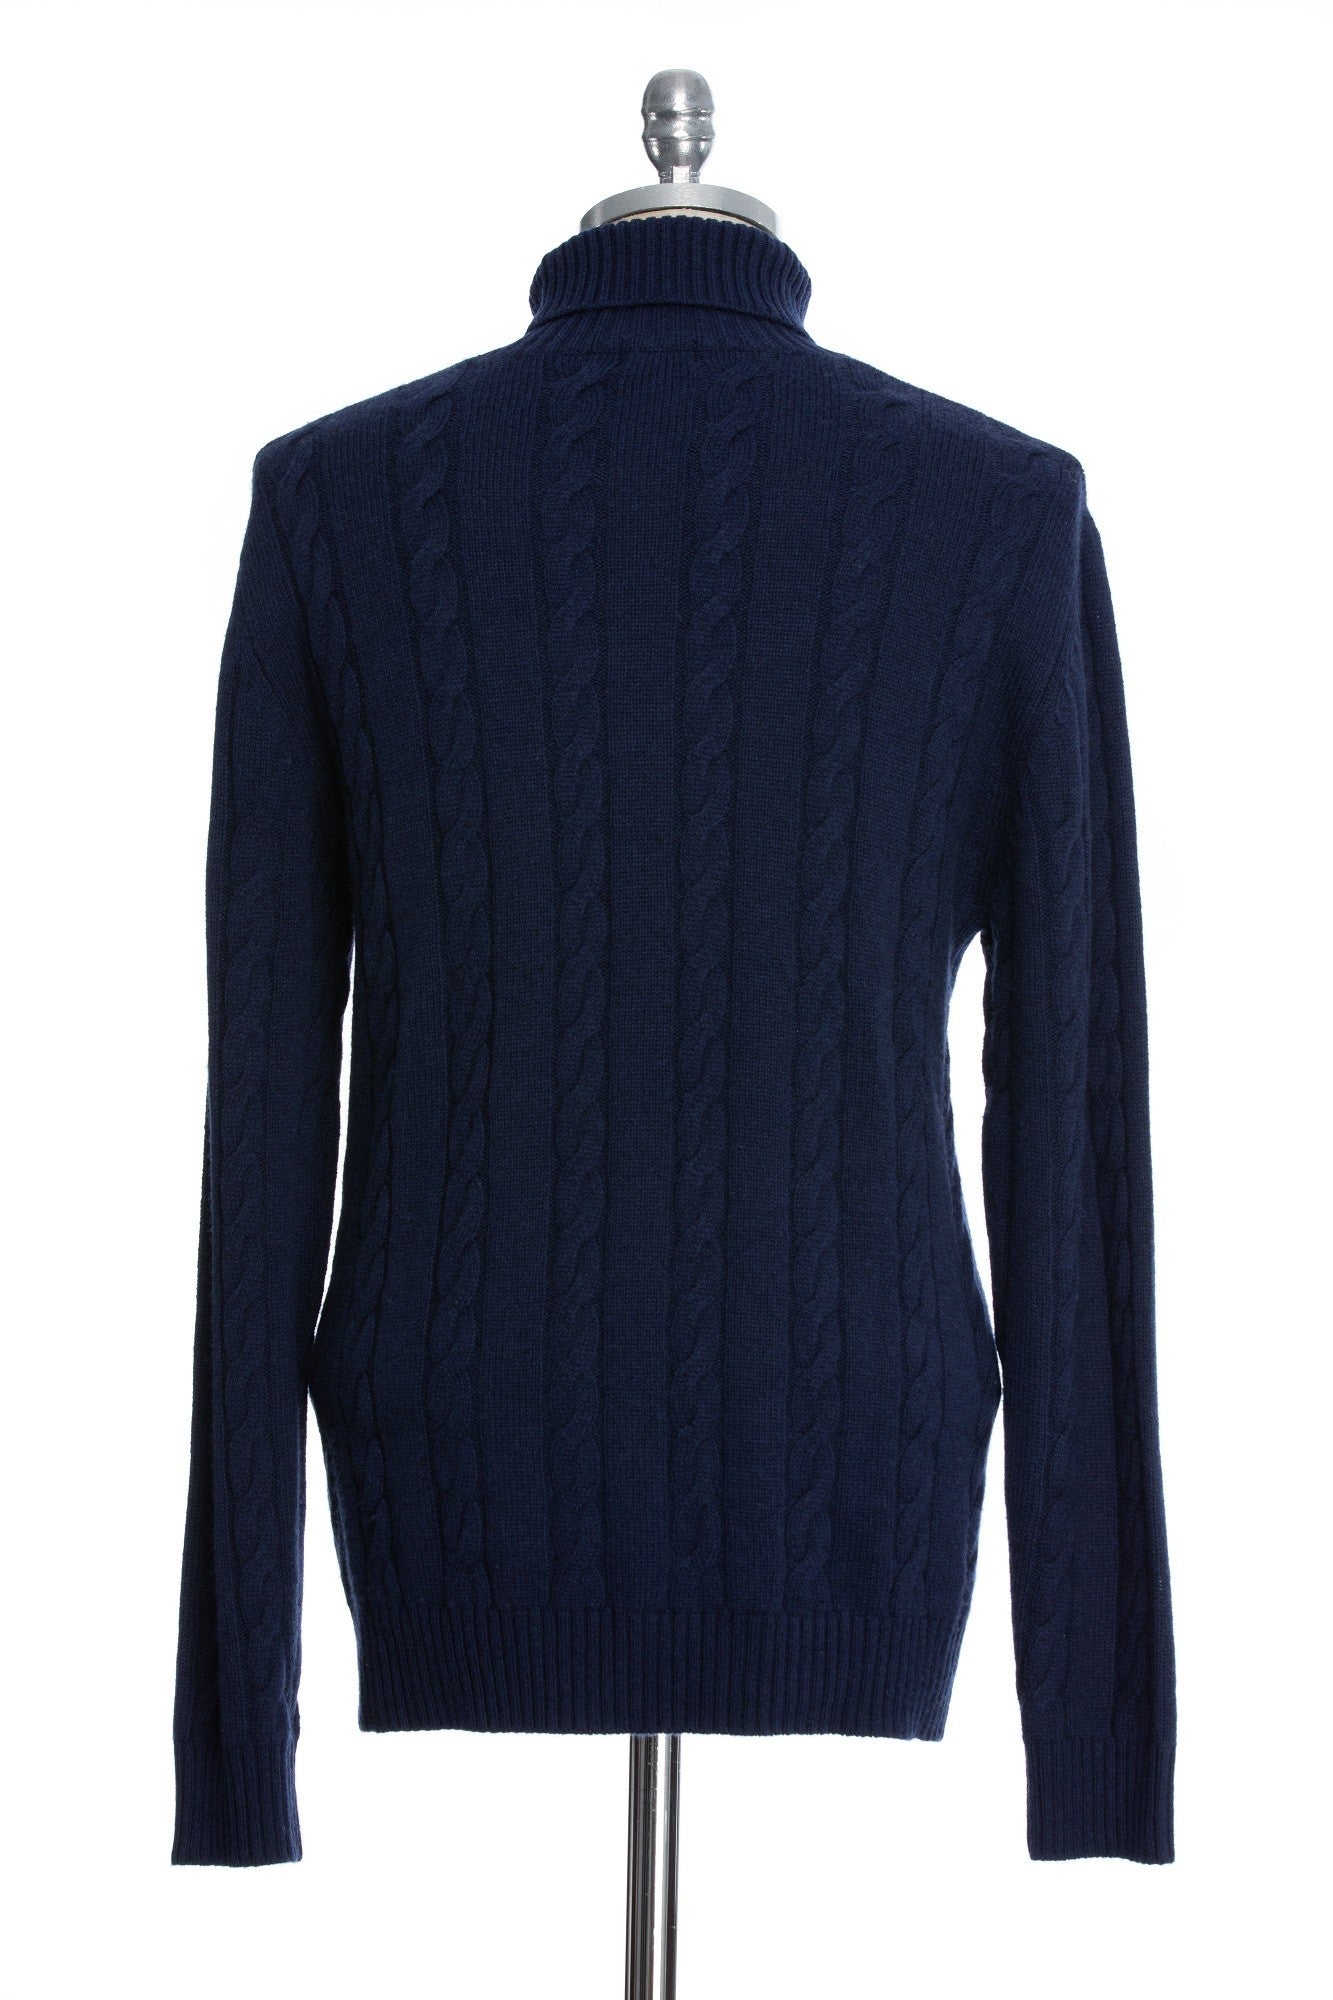 Maglione in lana blu navy